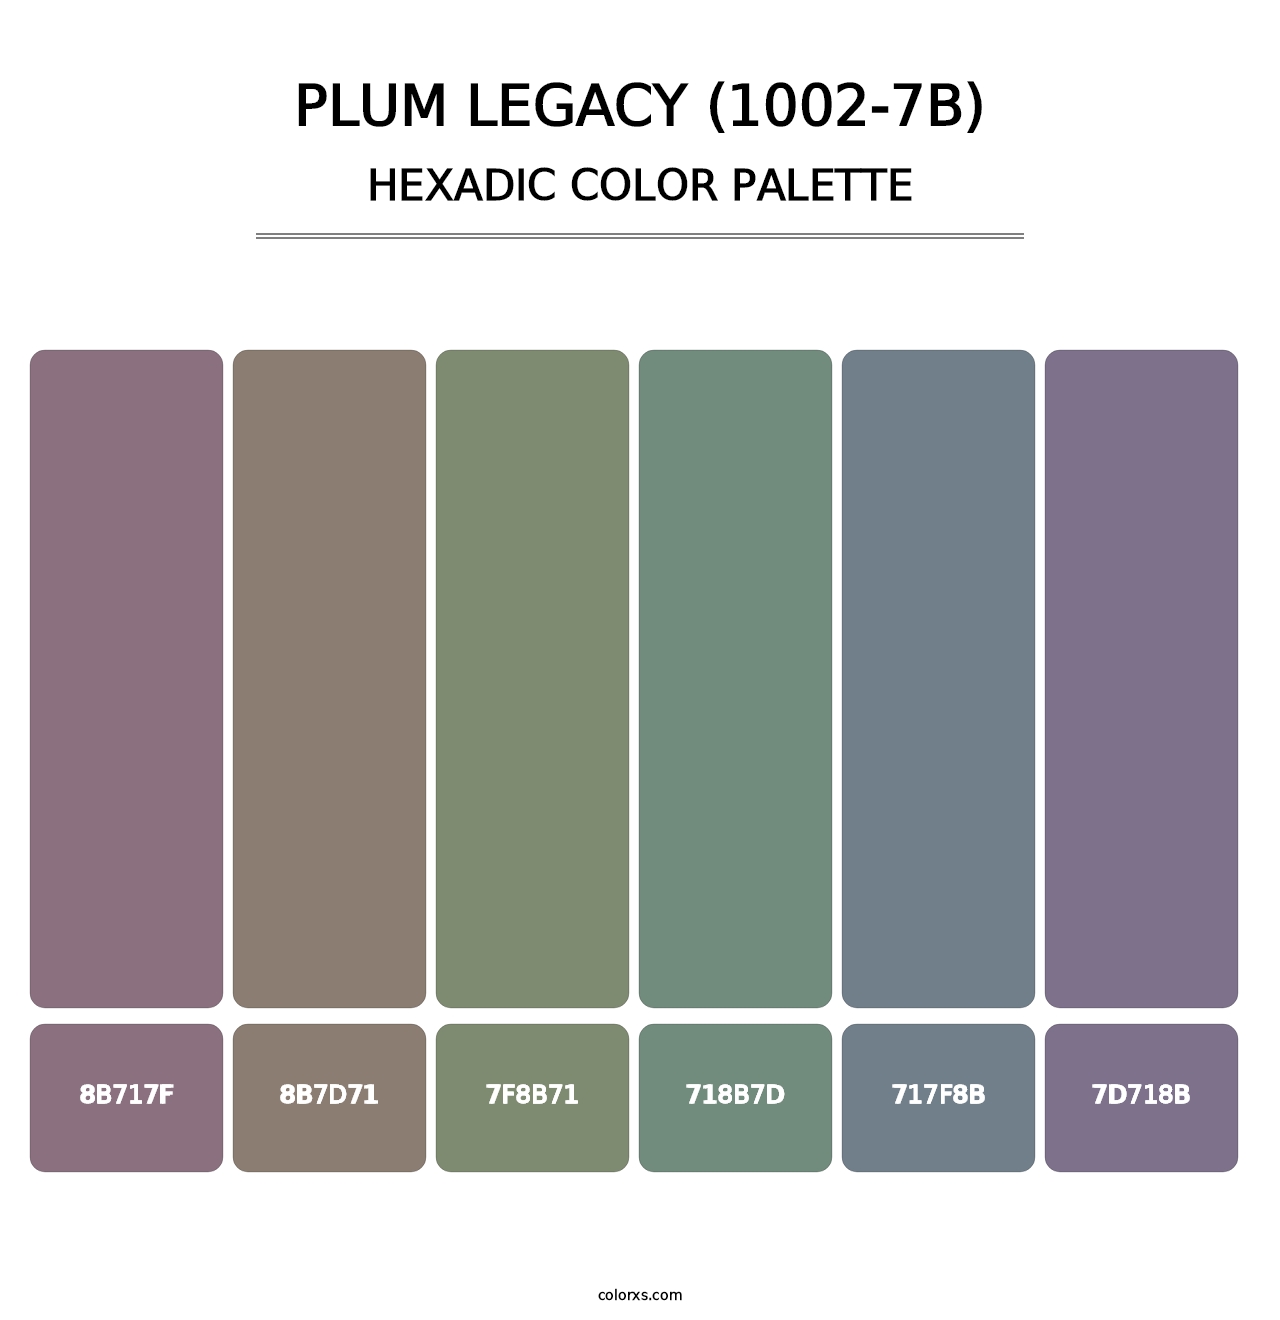 Plum Legacy (1002-7B) - Hexadic Color Palette